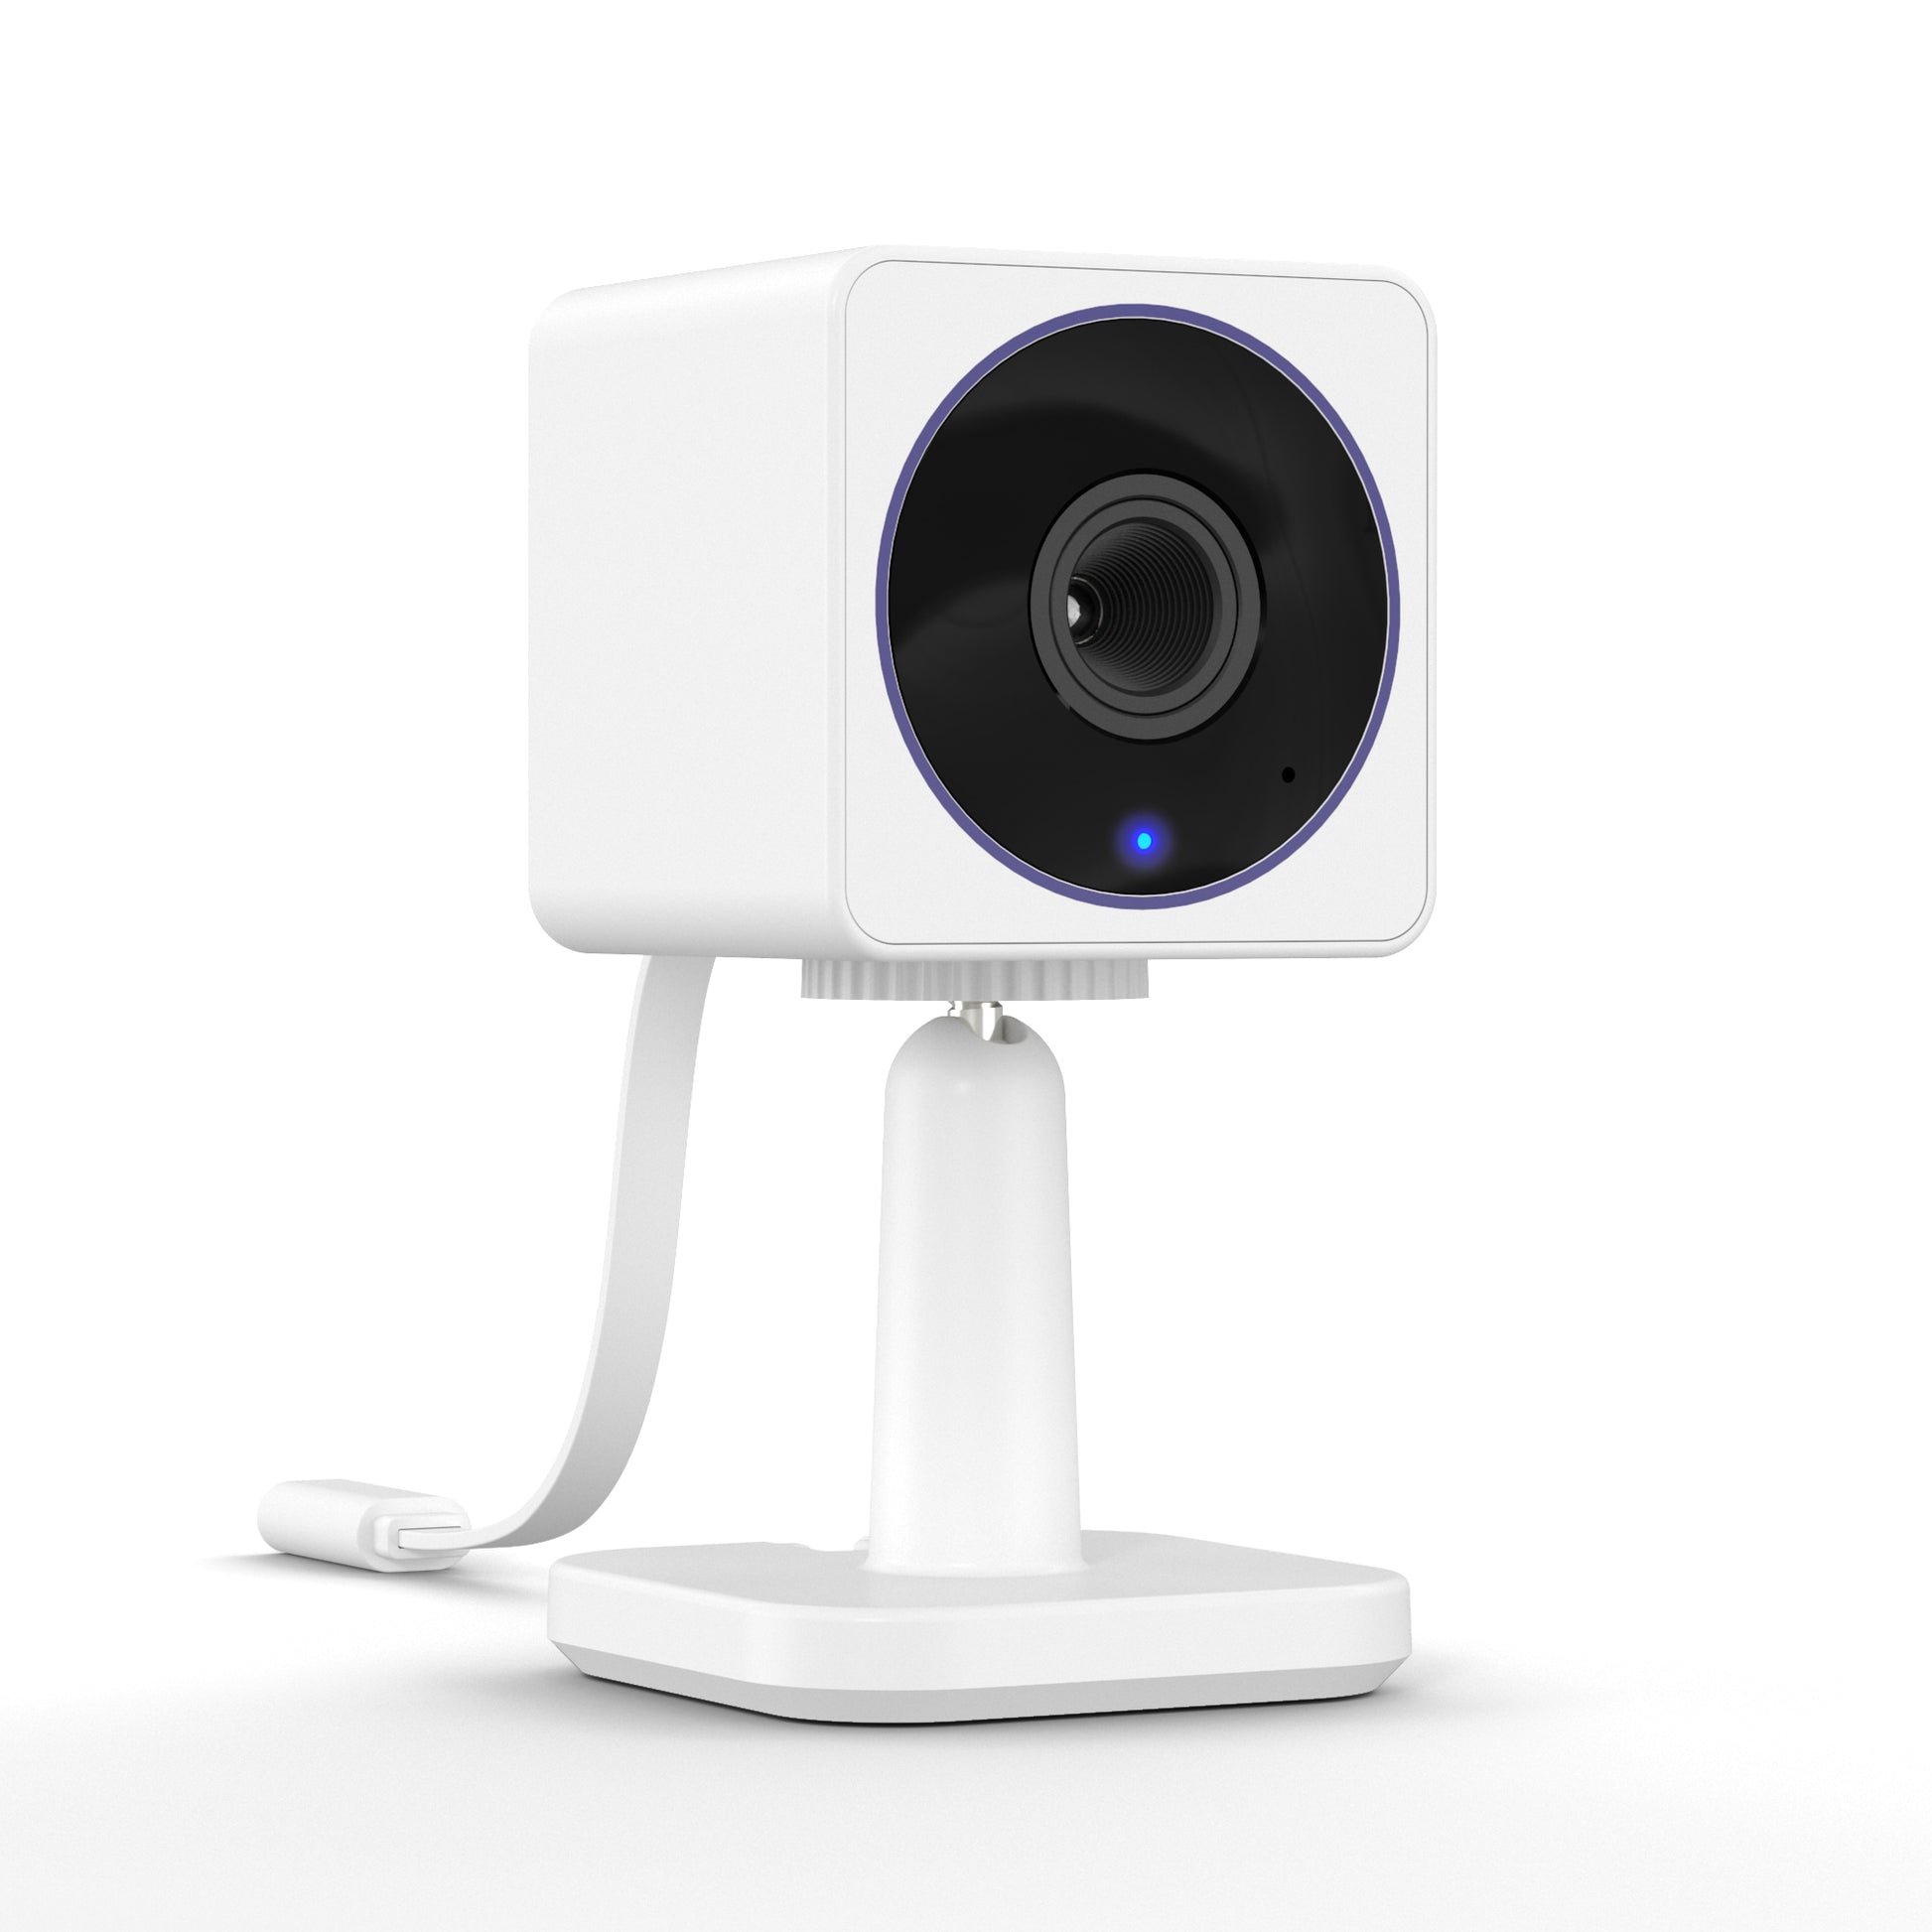 Security Camera Image Sensor [Product]